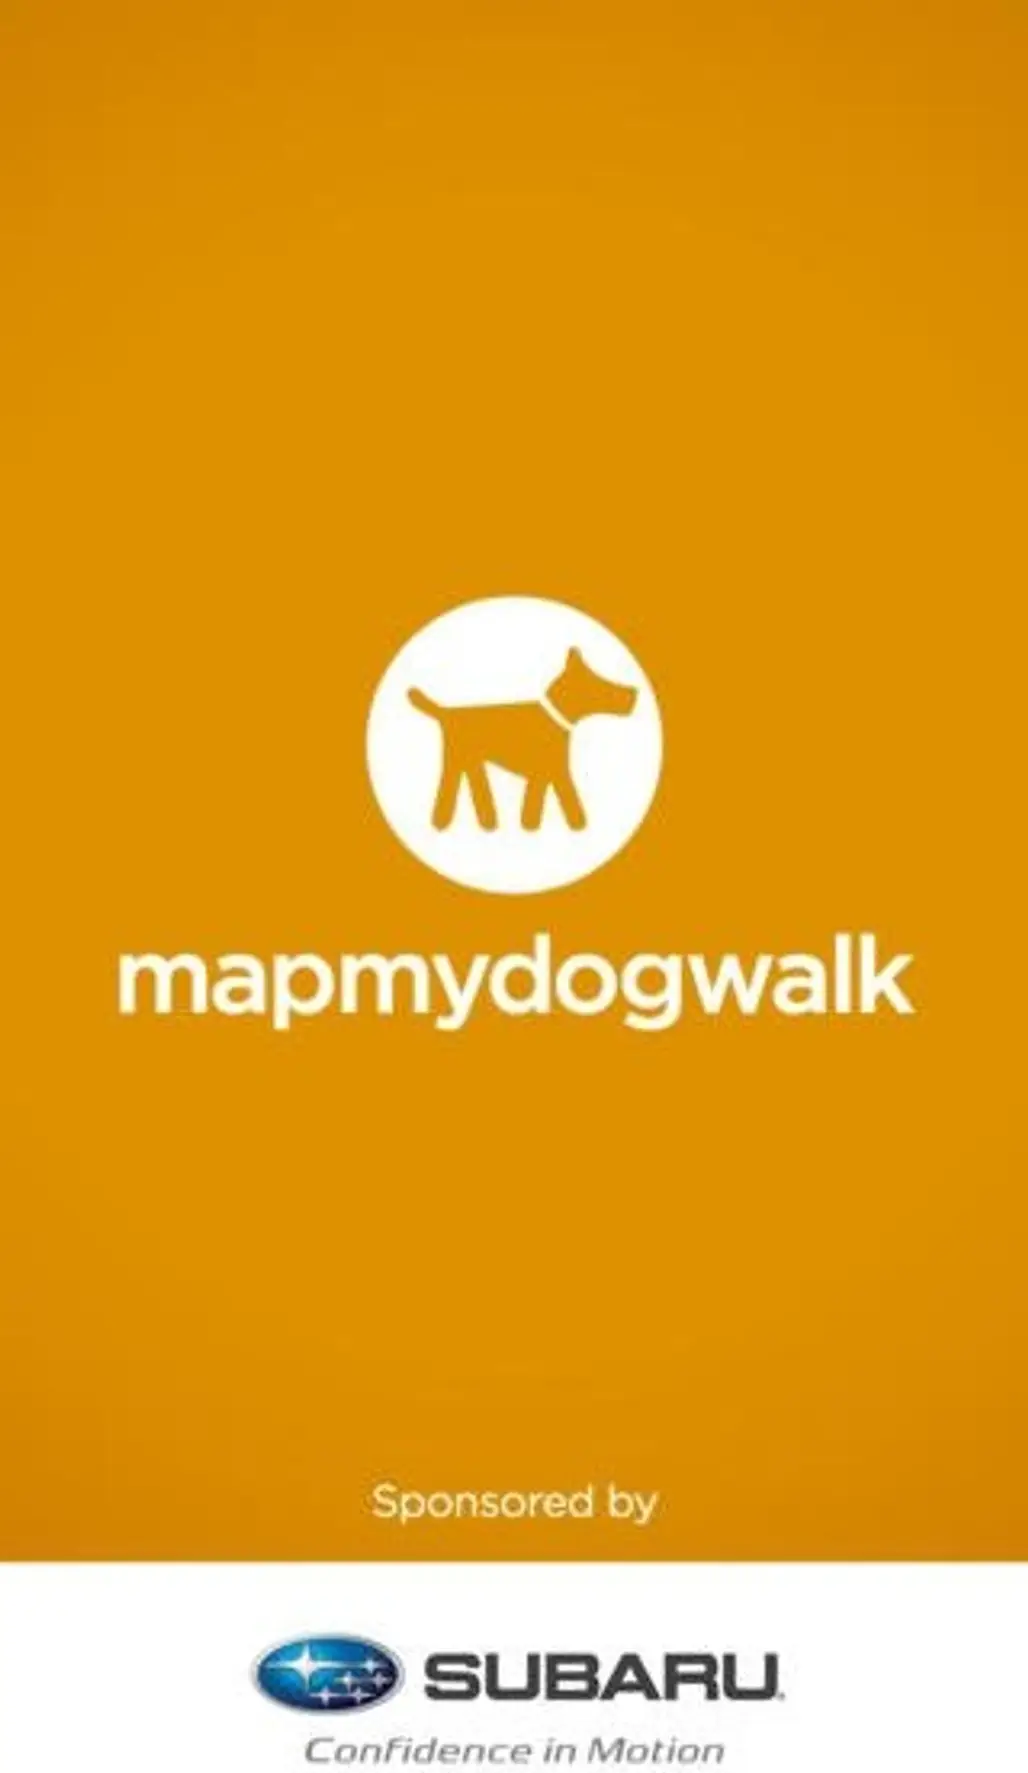 MapMyDogwalk